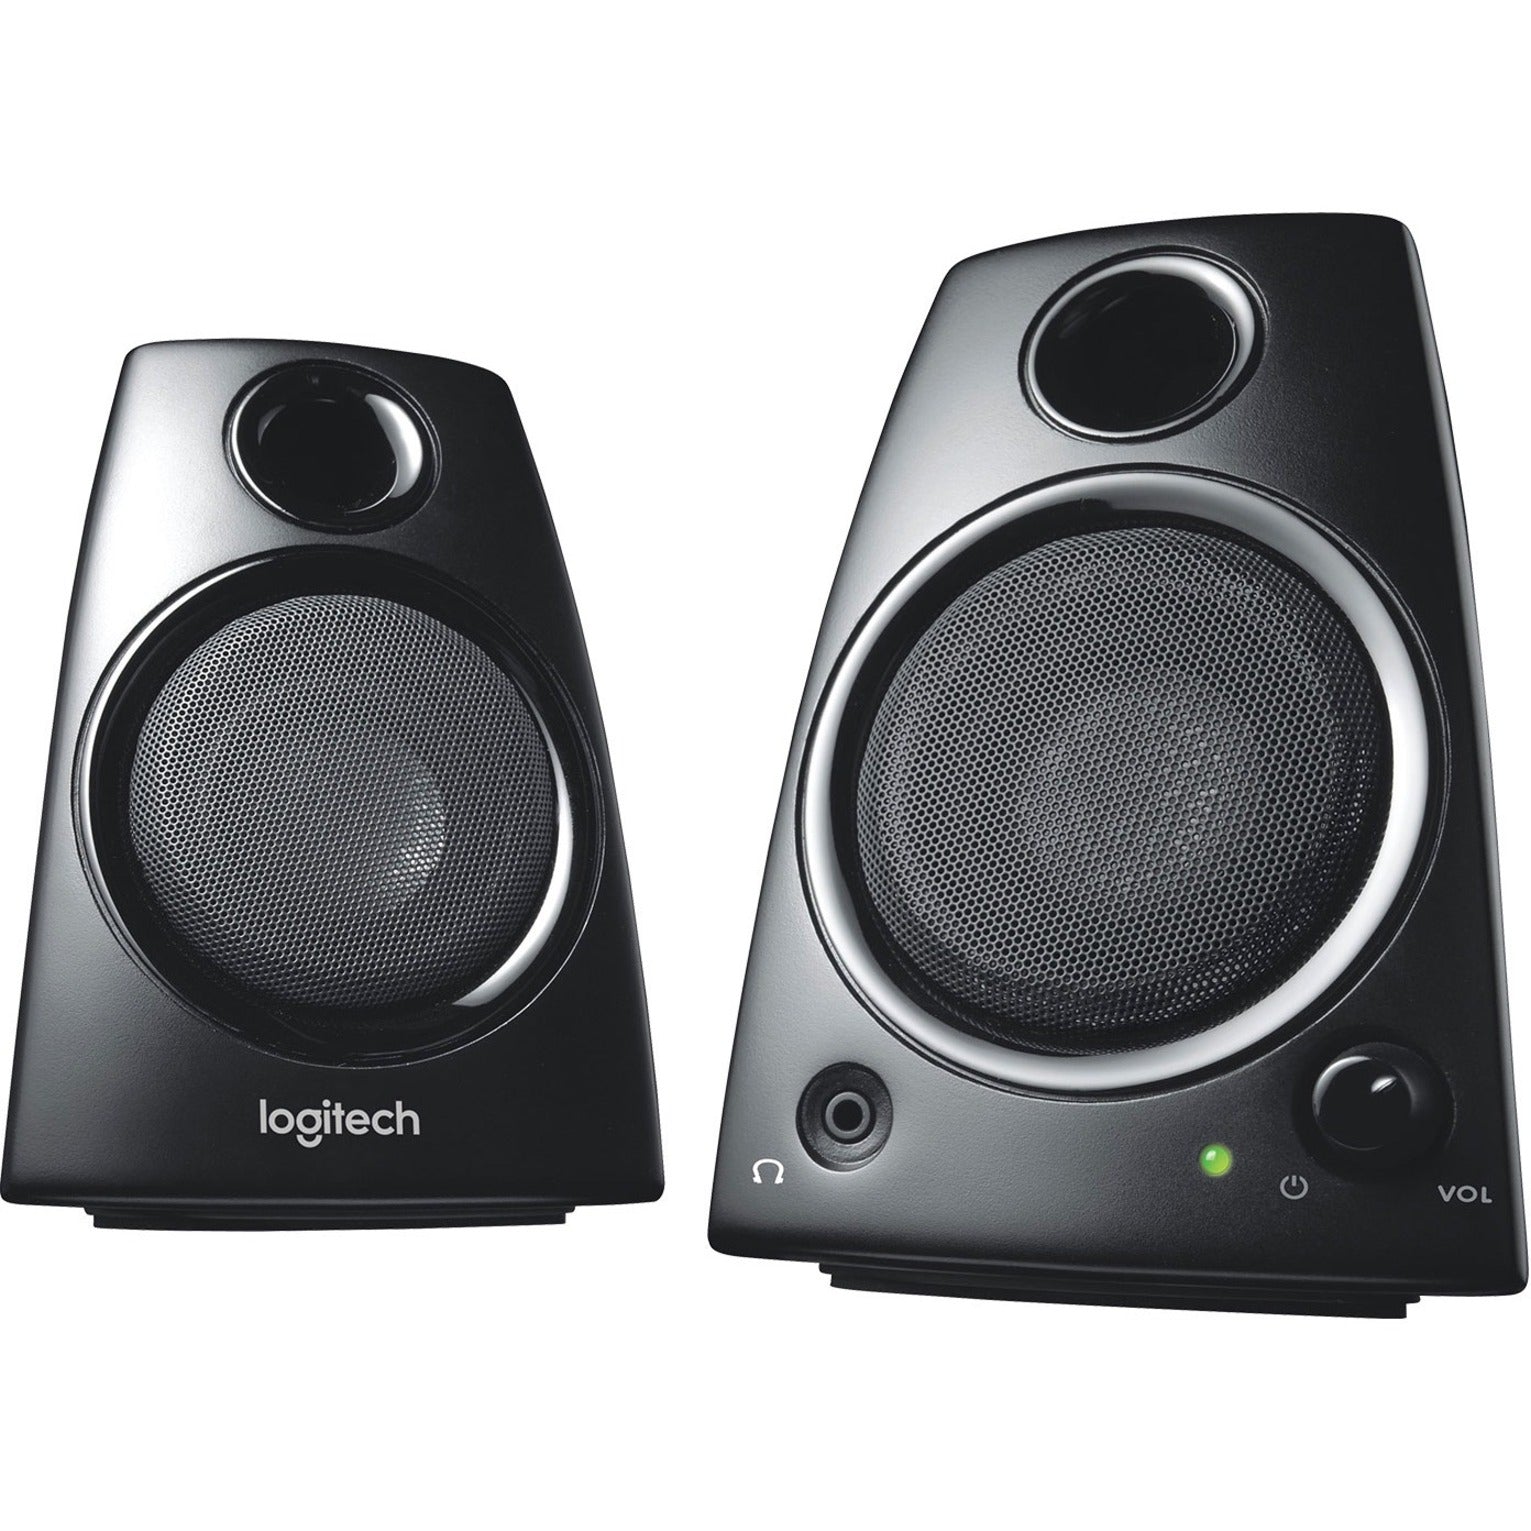 Logitech 980-000417 Z130 Compact Speakers, 2.0 Speaker System - 5W RMS, Black